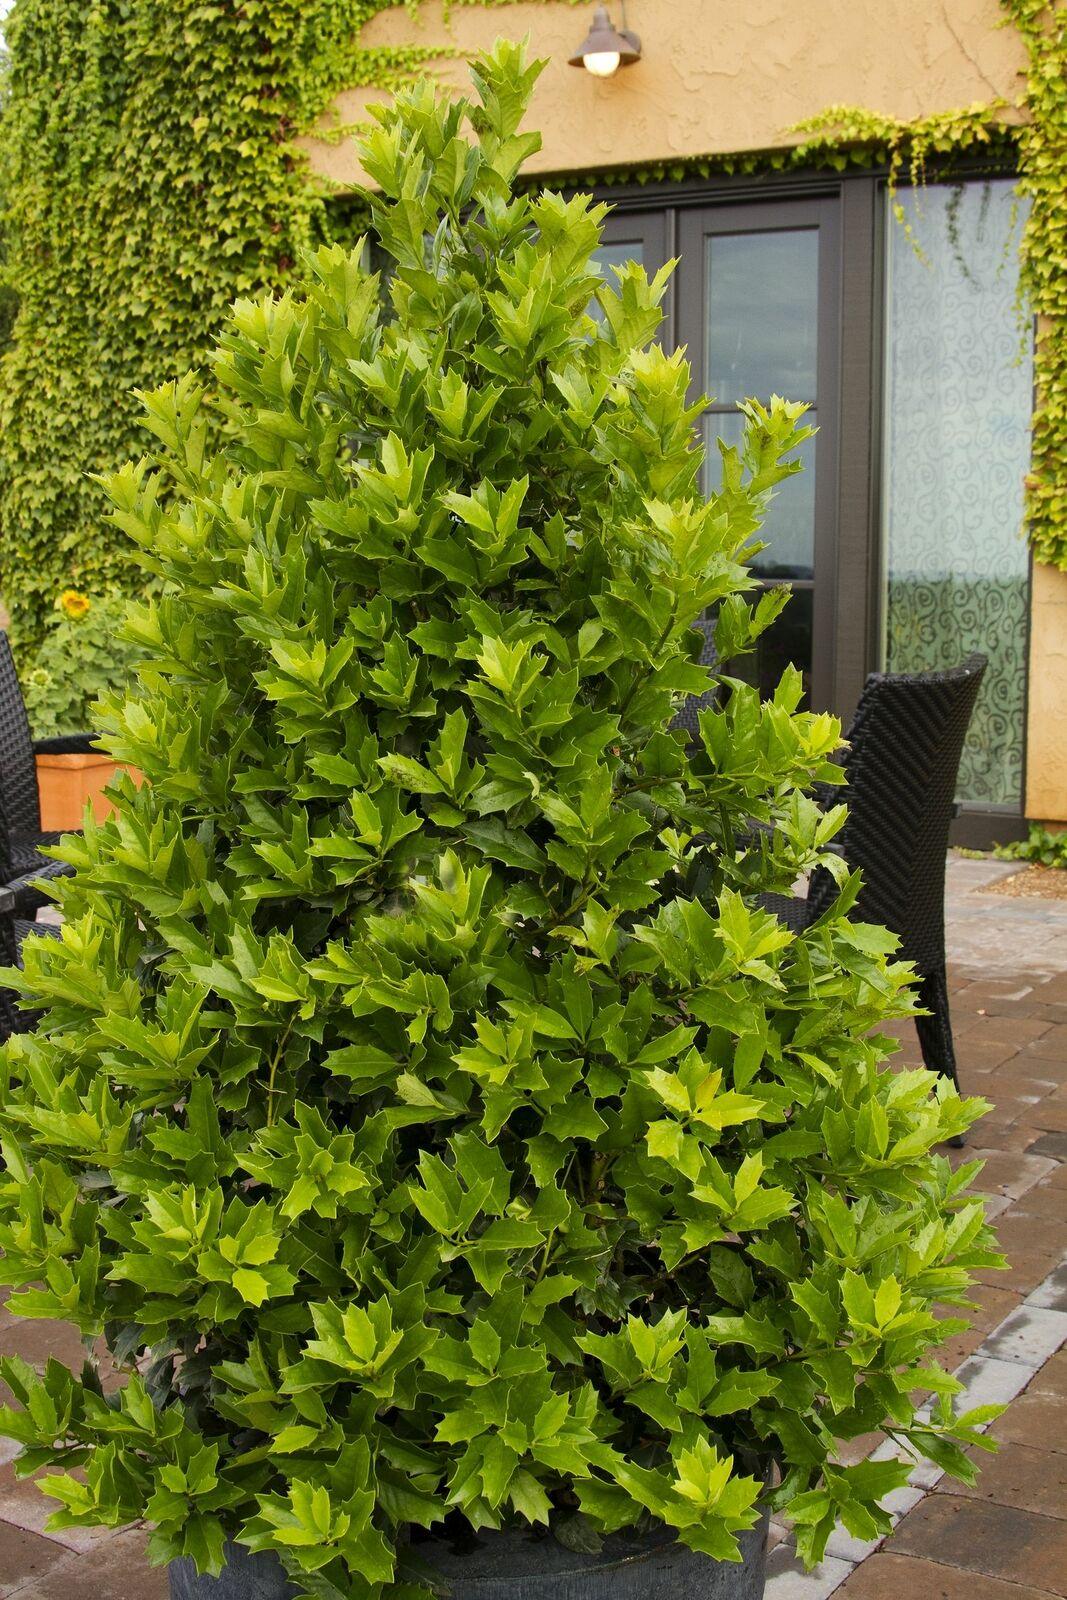 Oak Leaf Red Holly Shrub/Tree - 6-12" Tall Live Plant - 3" Pot - Ilex x 'Conaf' - The Nursery Center